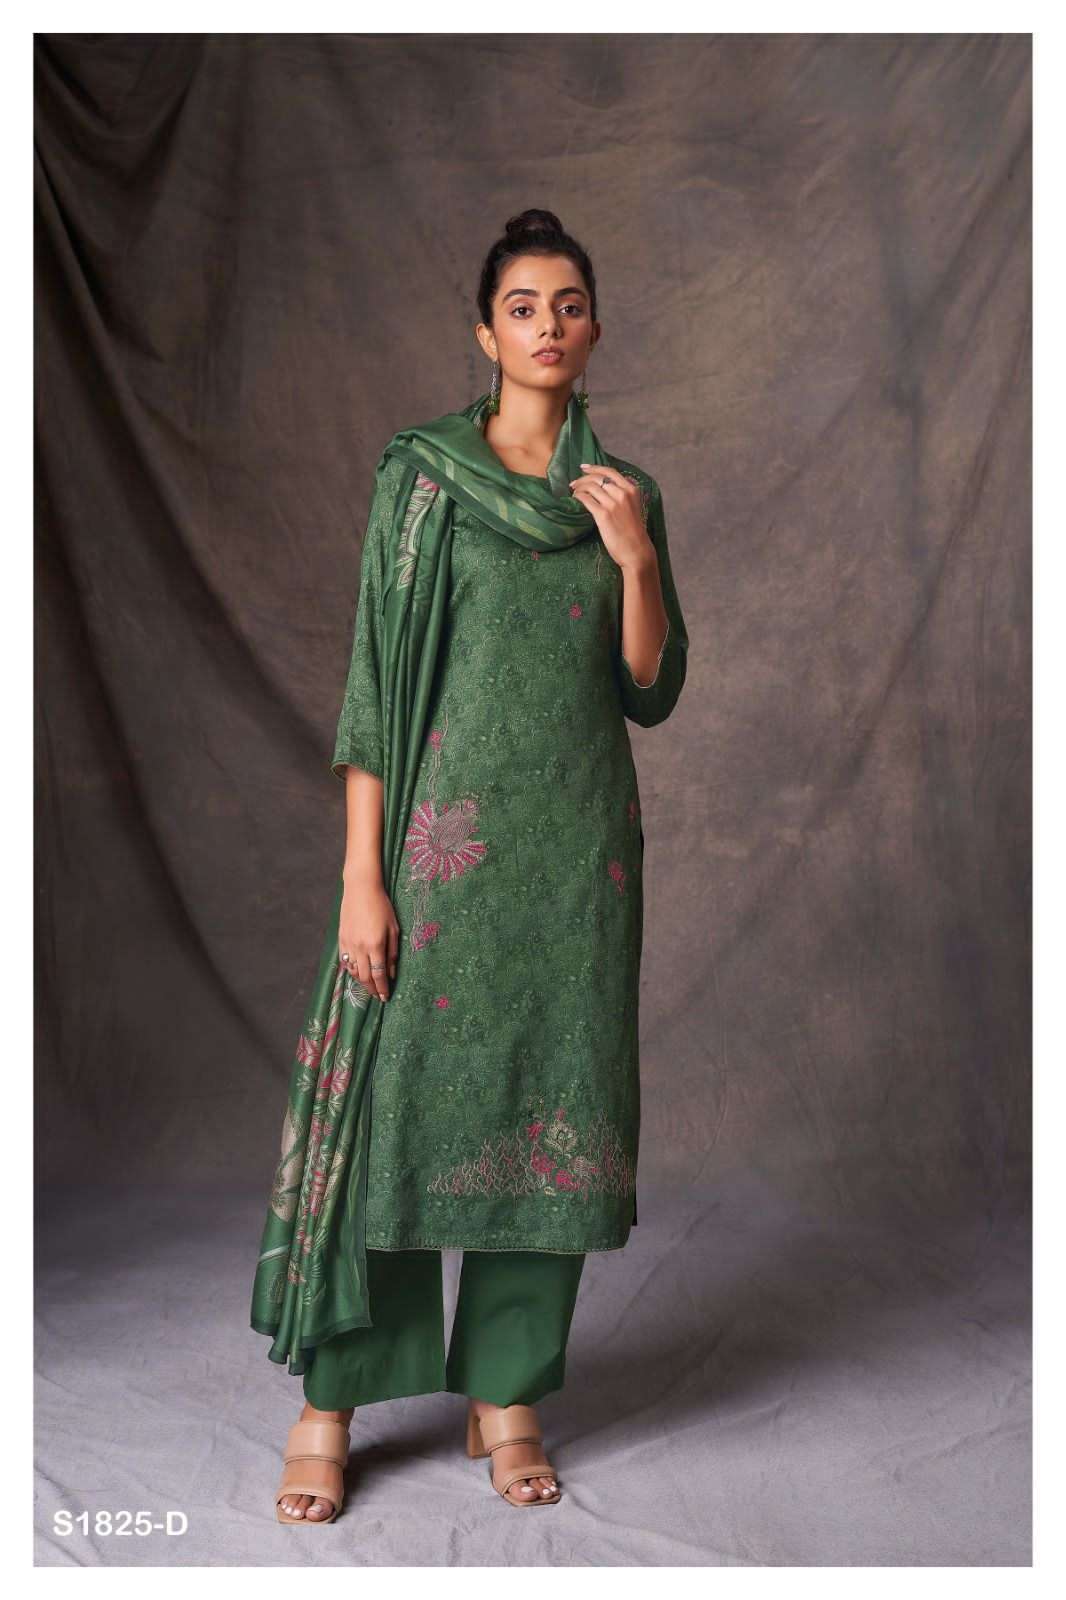 ganga delanie 1825 series exclusive designer salwar kameez catalogue wholesaler surat 